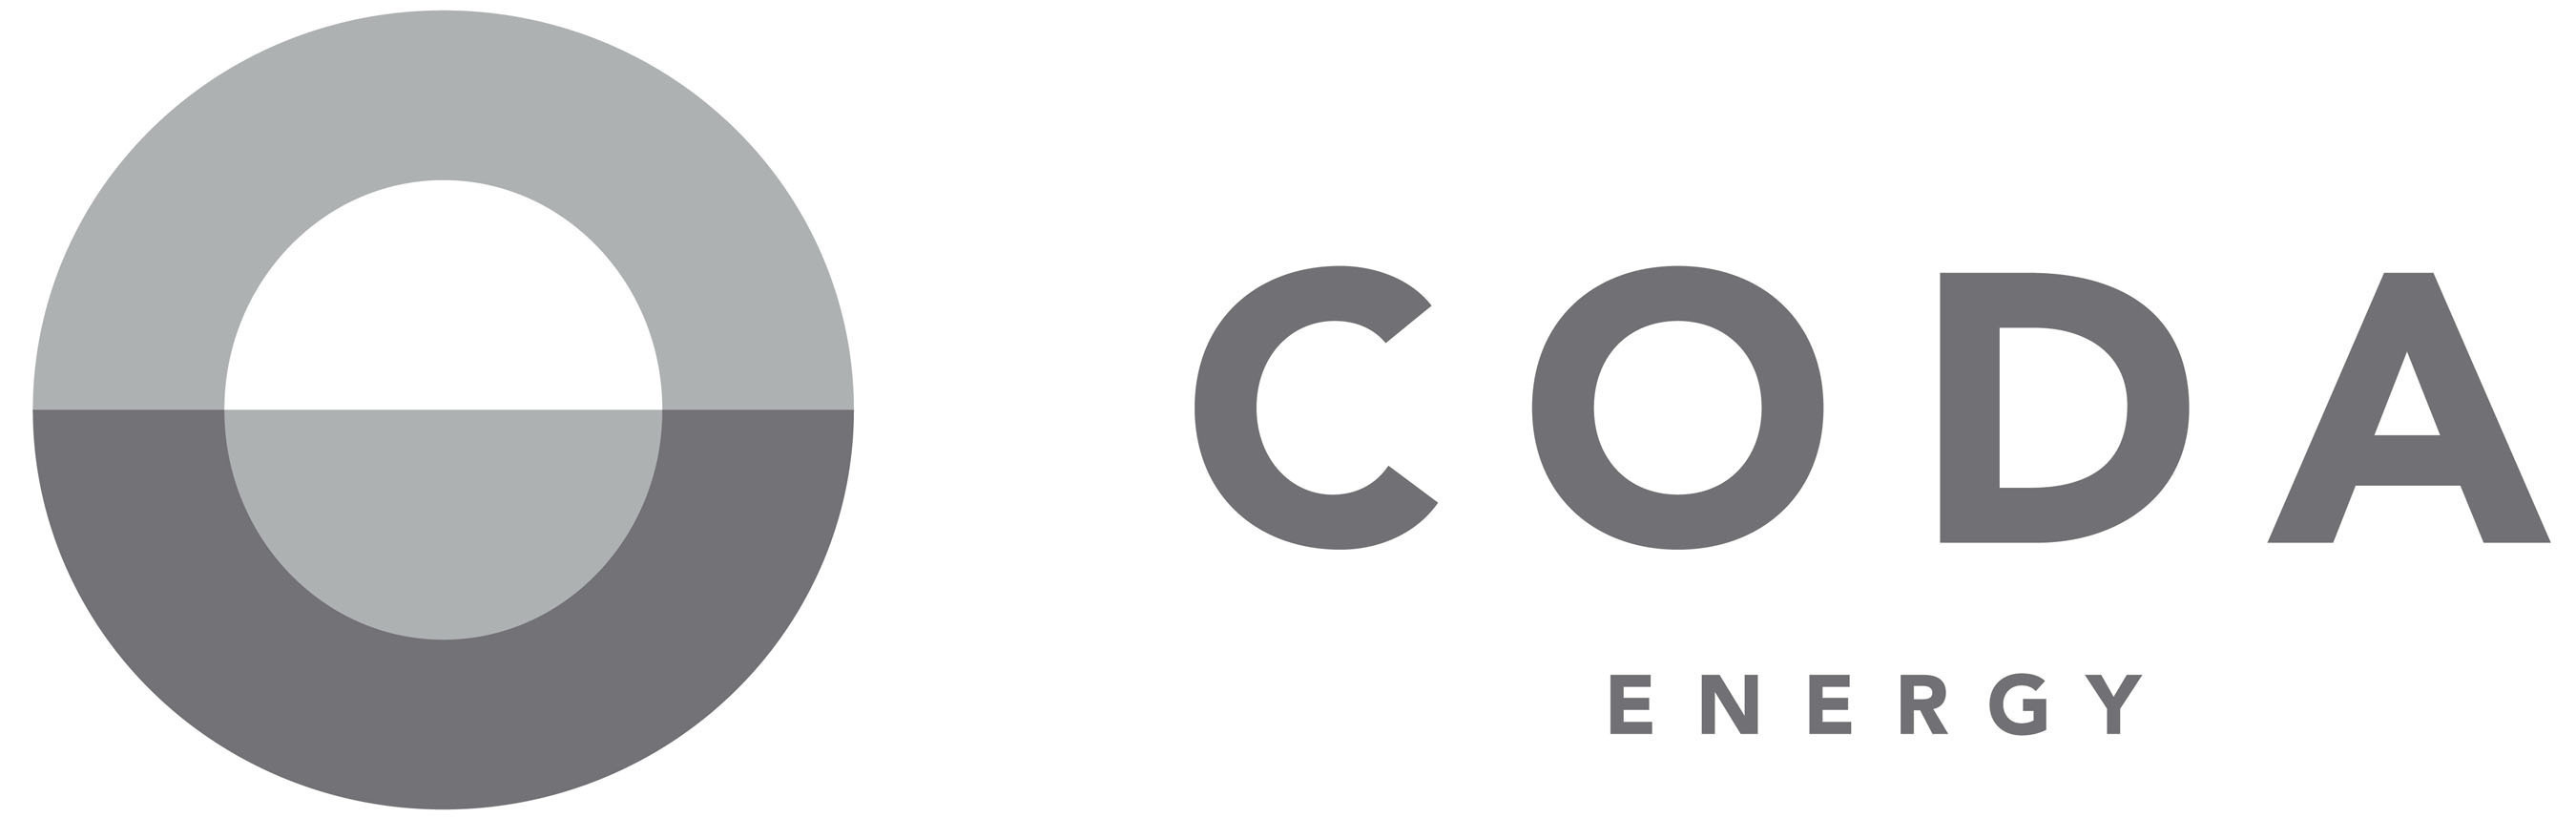 CODA Energy Logo.